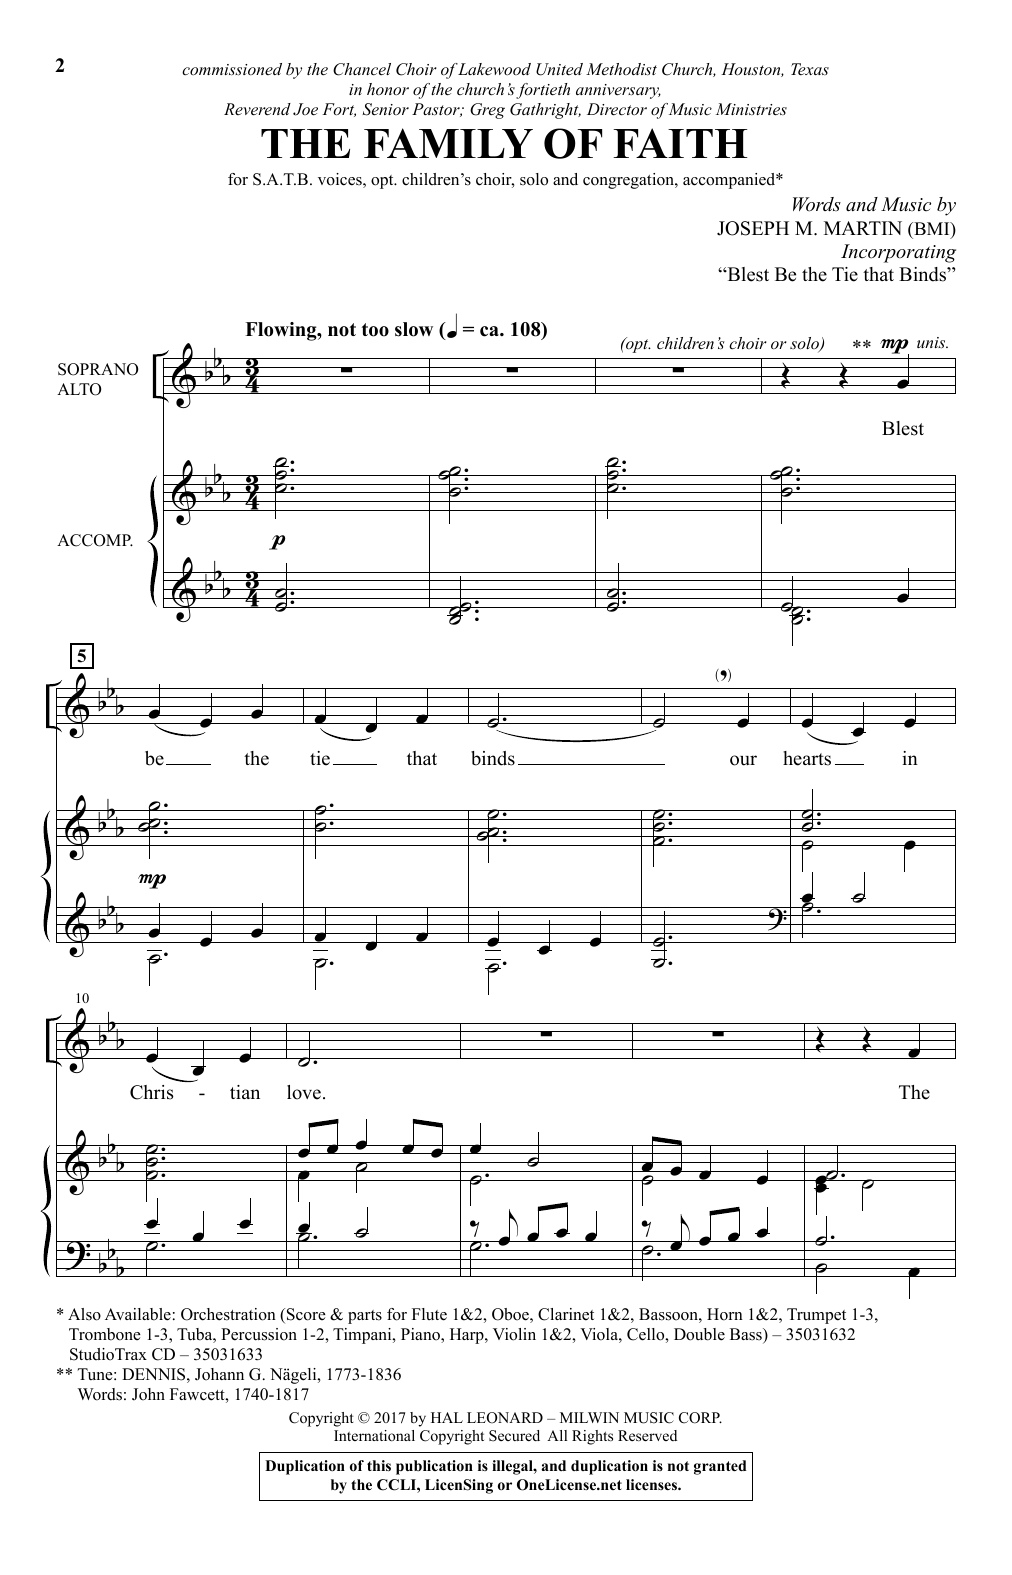 Joseph M. Martin Family Of Faith sheet music notes and chords arranged for SATB Choir